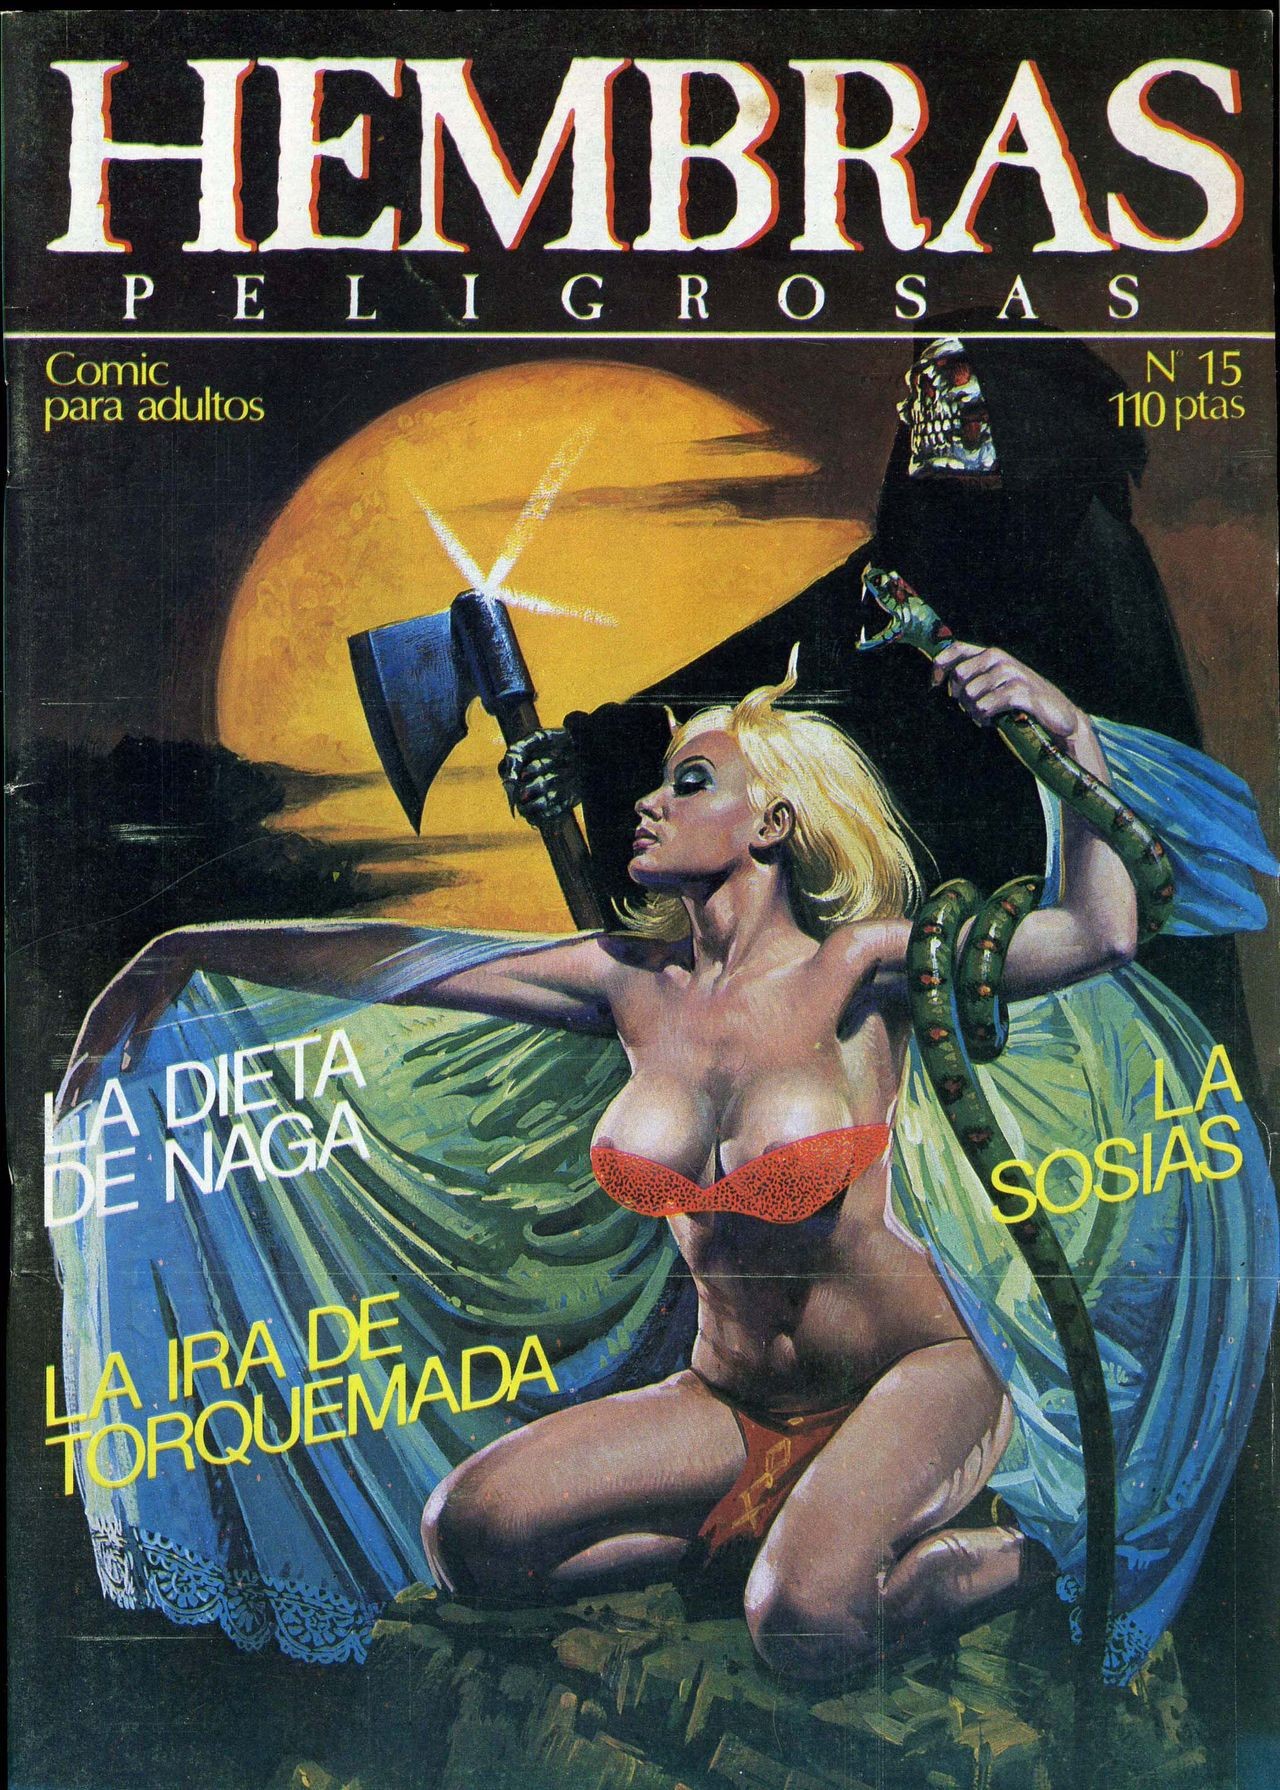 Jerking Off Hembras Peligrosas #15 [Spanish] Nudes